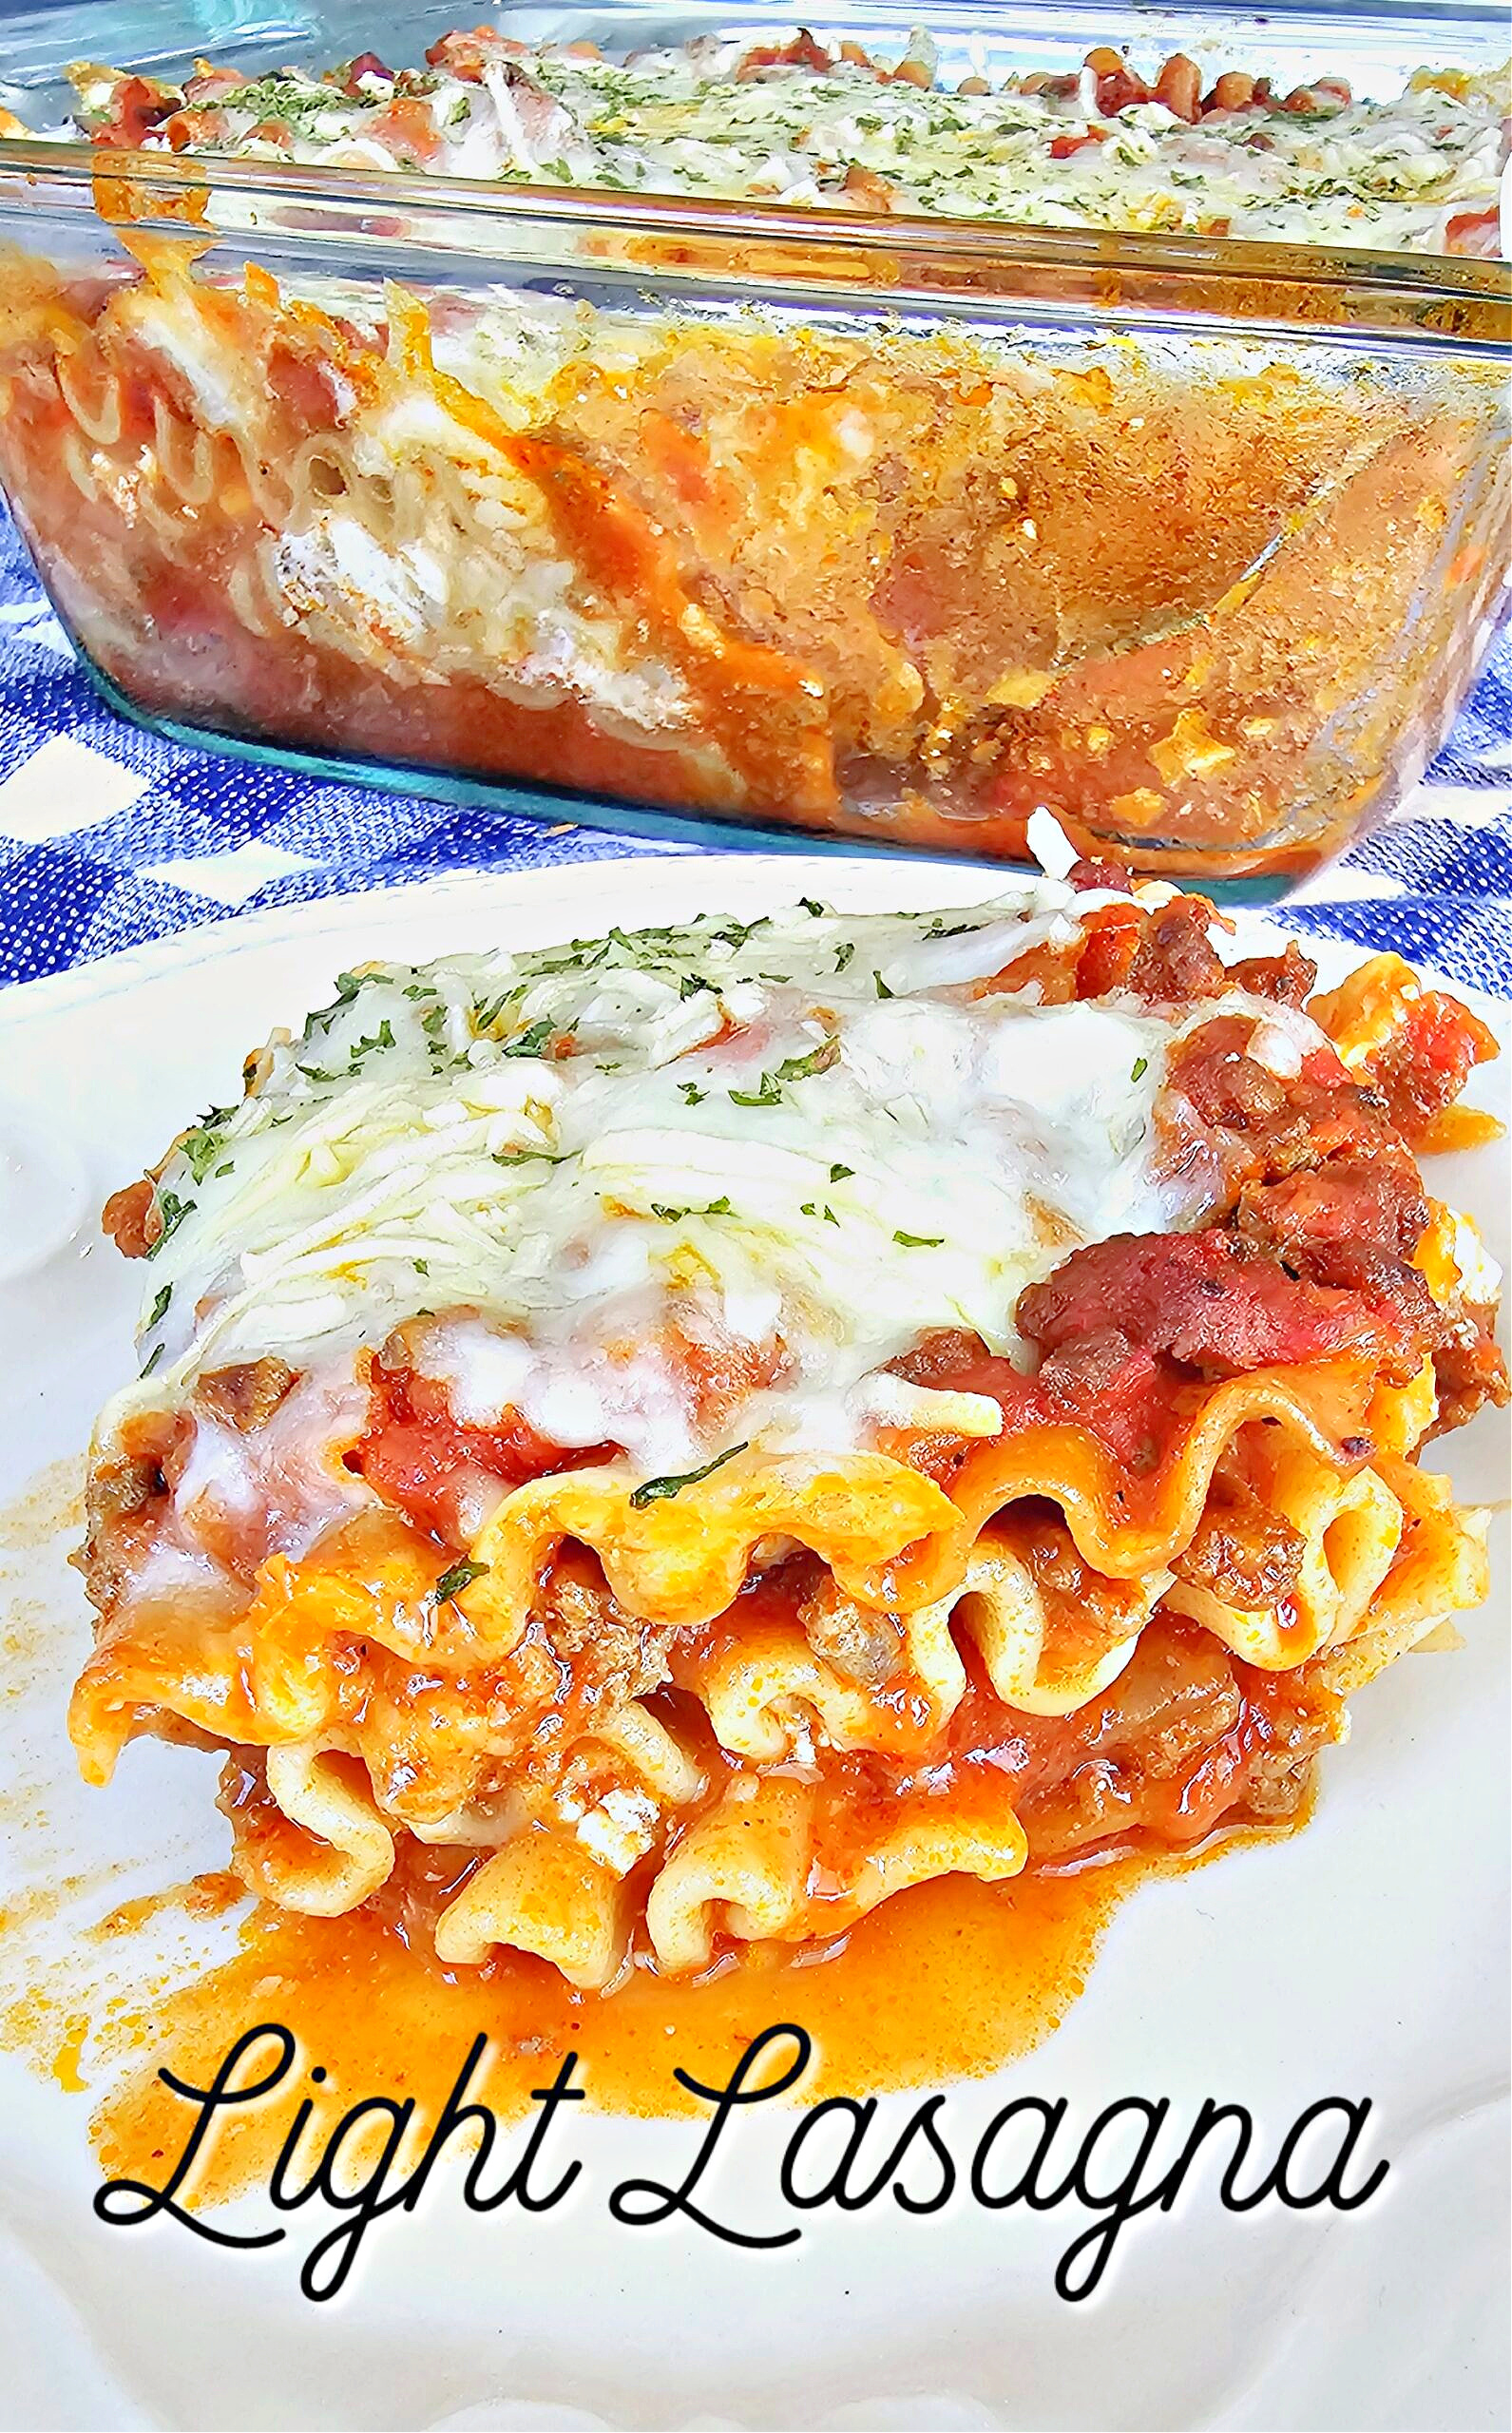 Light Lasagna #lasagna #healthy #onepanmeal #dinner #easyrecipe #casserole